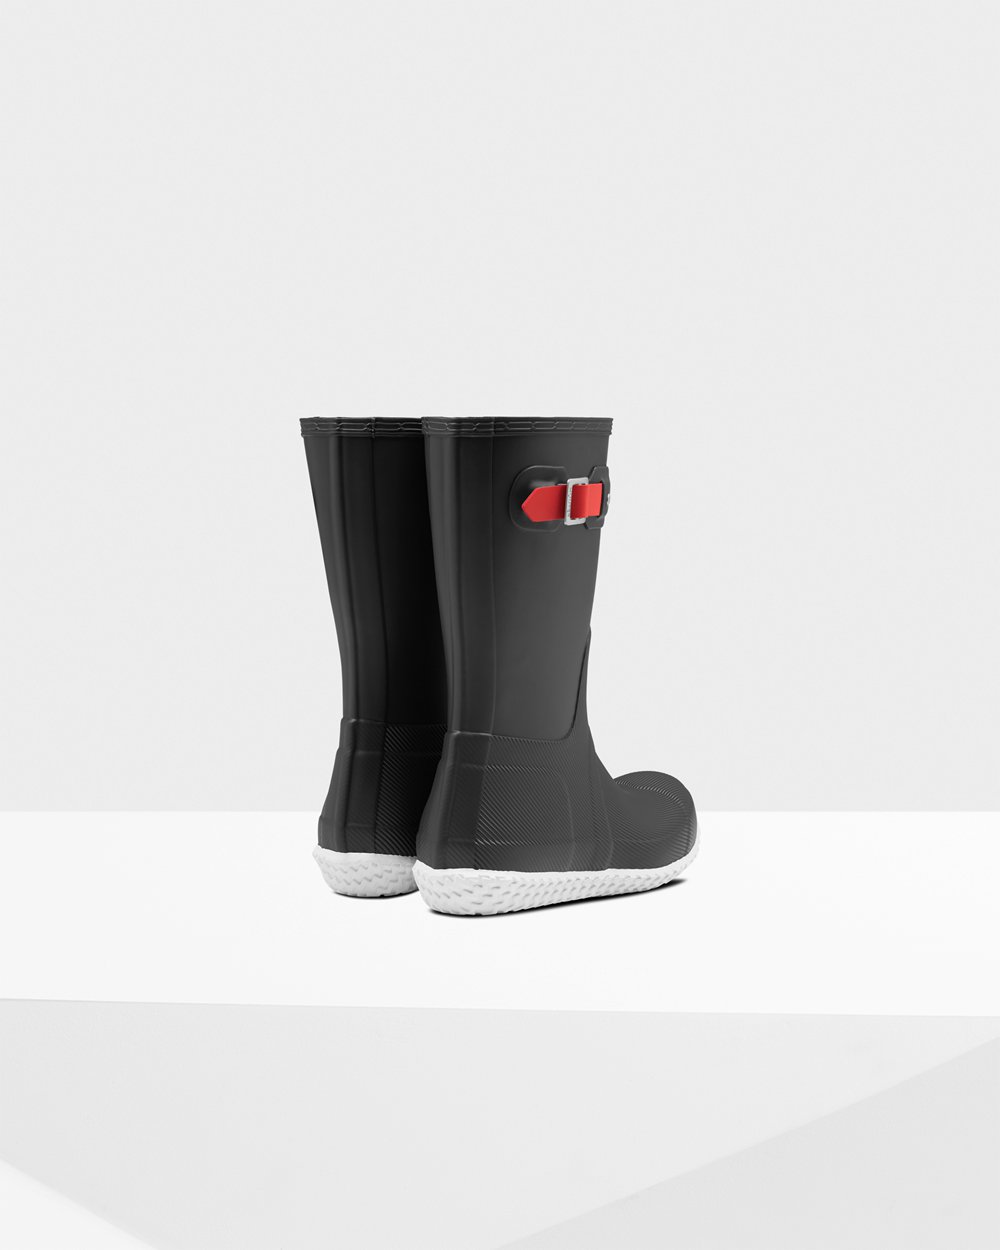 Mens Short Rain Boots - Hunter Original Flat Heel Calendar Sole (70TZHBROY) - Black/Red